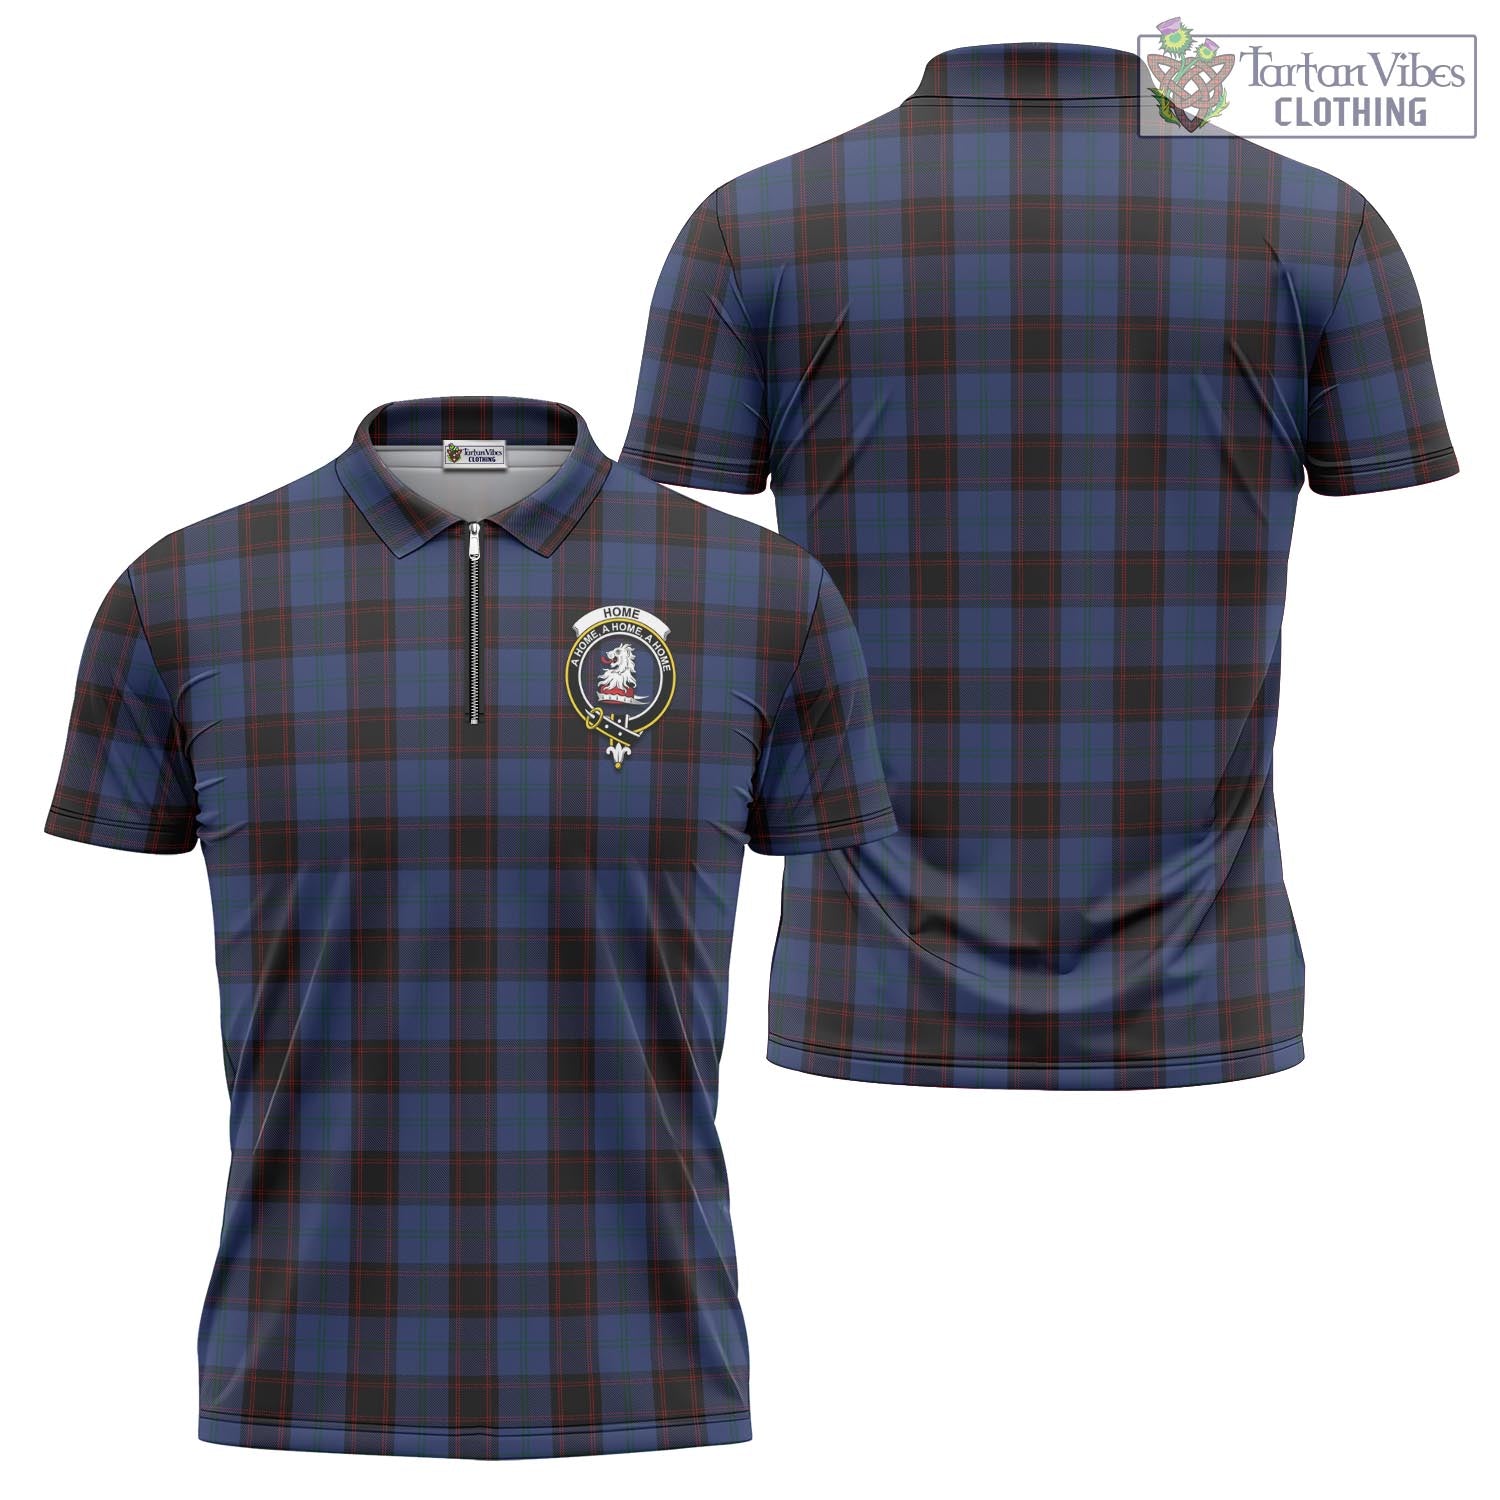 Tartan Vibes Clothing Home (Hume) Tartan Zipper Polo Shirt with Family Crest